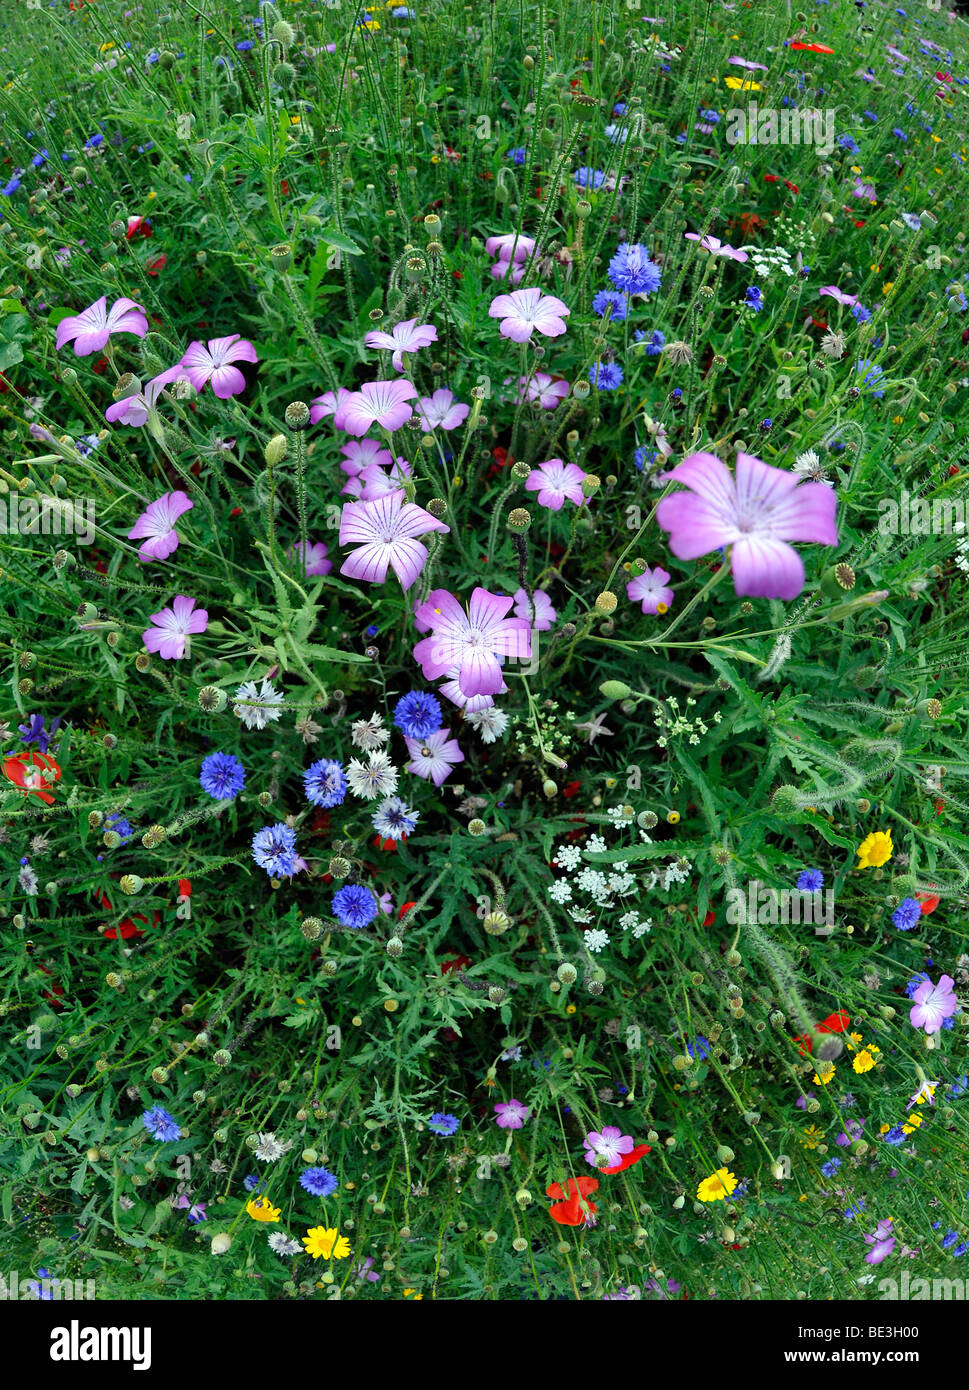 Summer meadow, Cornflowers (Centaurea cyanus), Yarrow (Achillea), Mallow (Malva), yellow Marguerites (Leucanthemum) Stock Photo